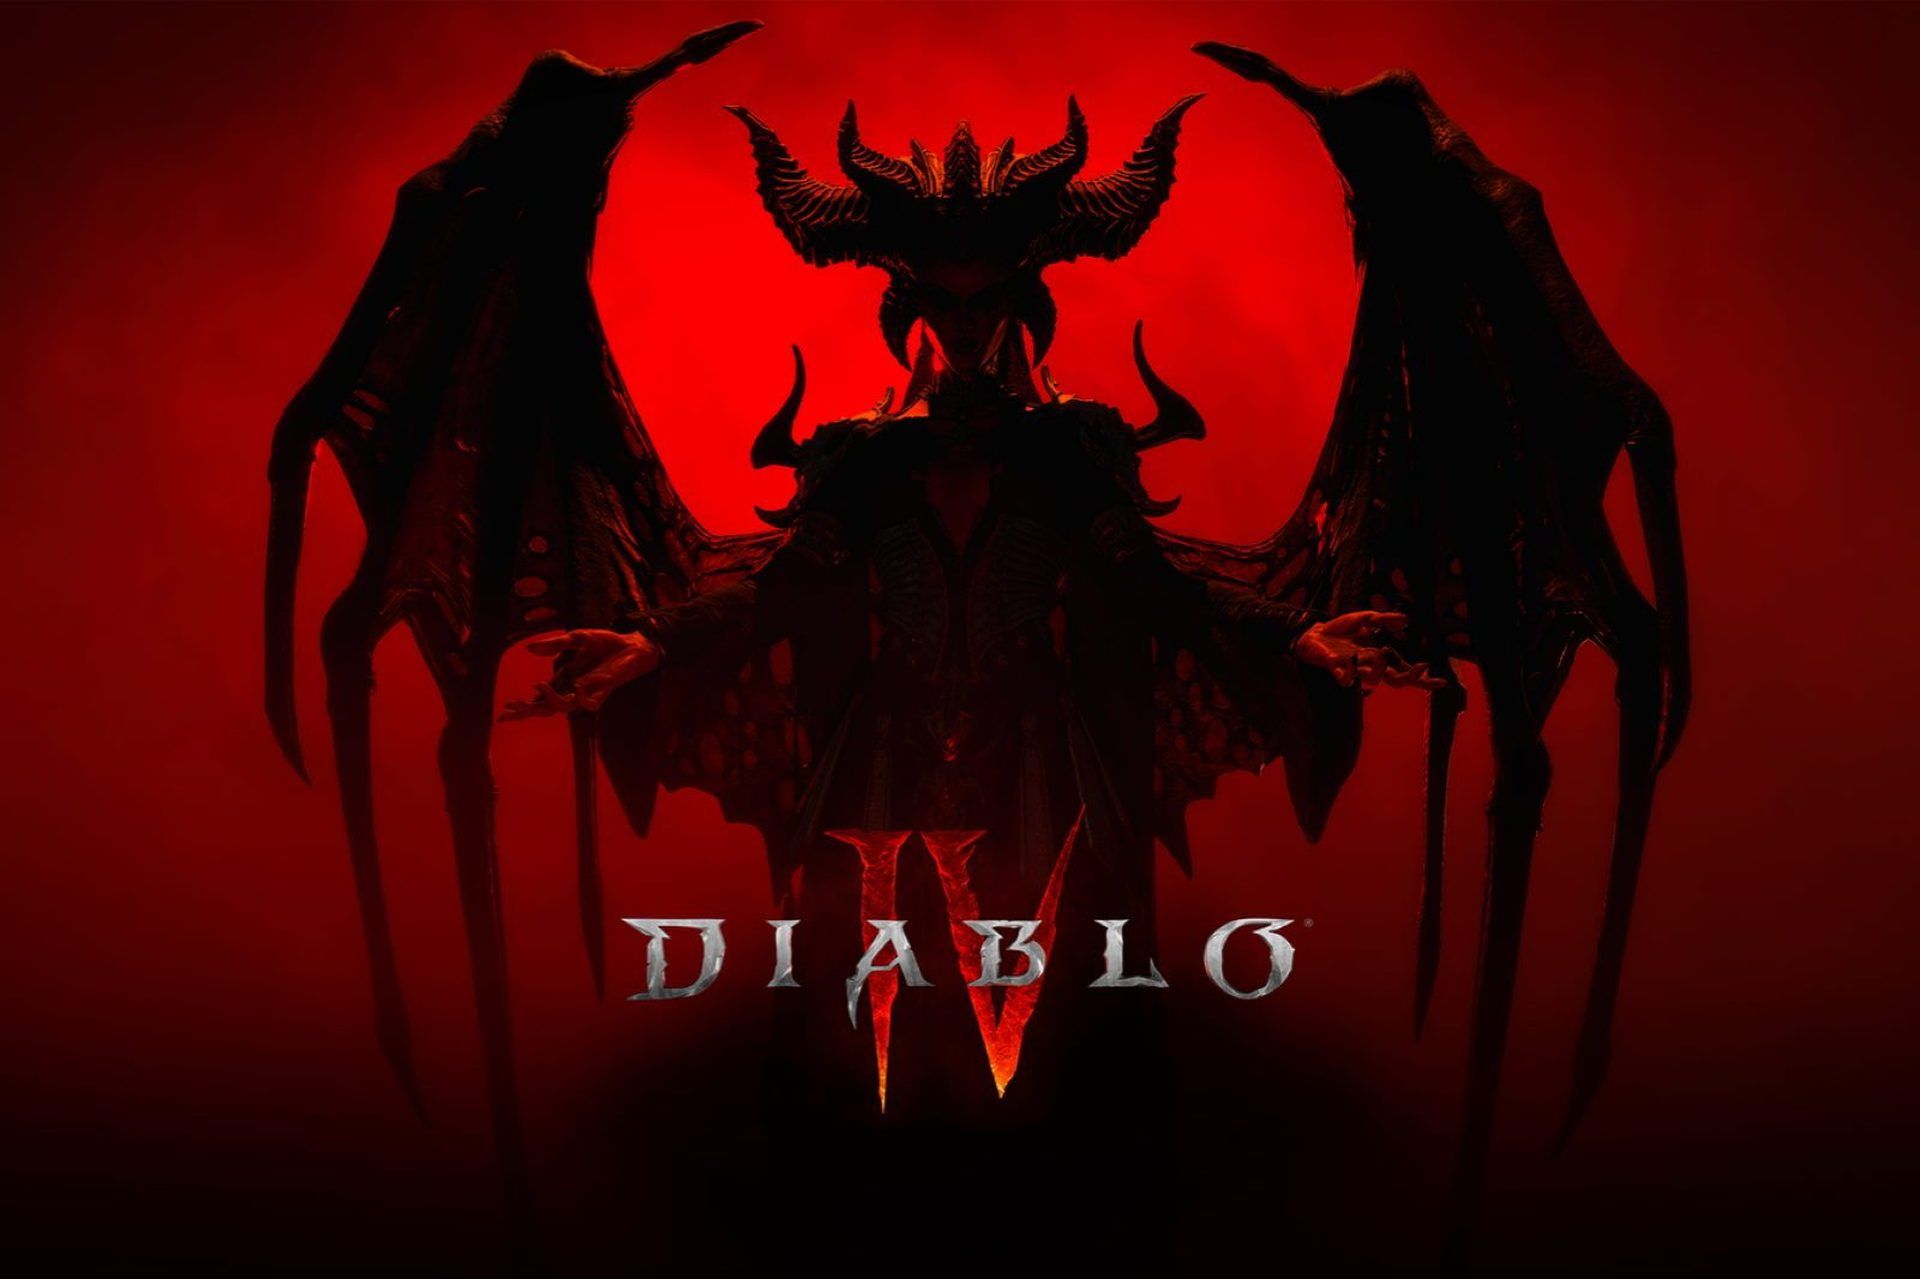 Diablo 4 high-resolution assets: Should you download it?